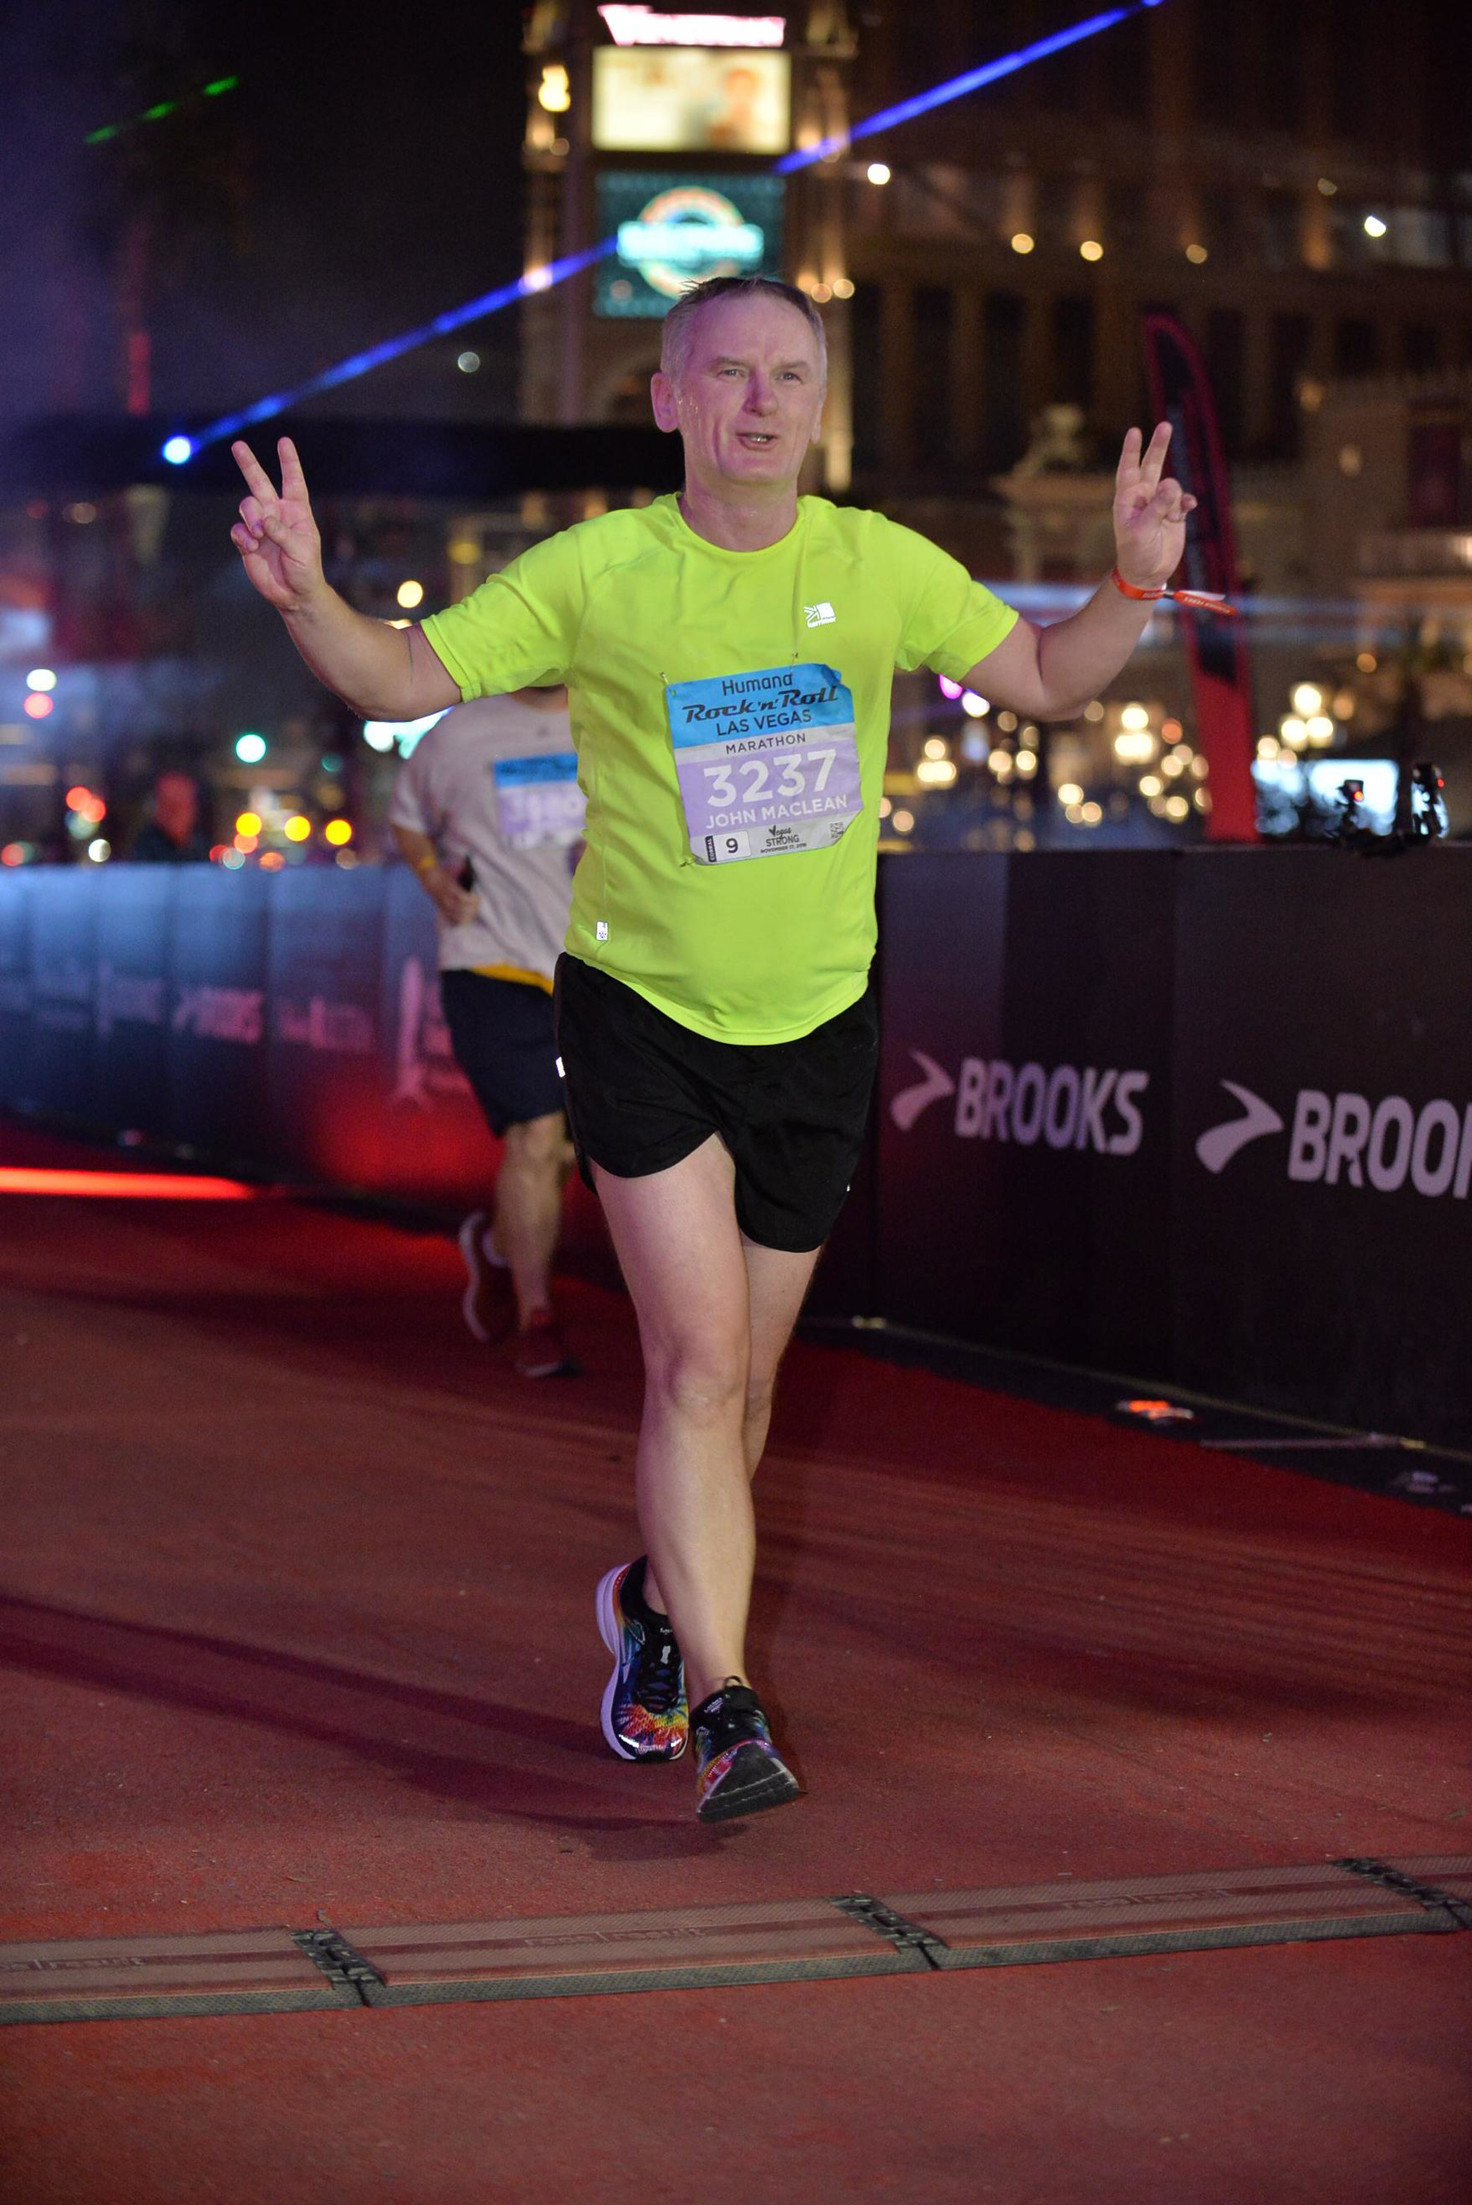  John took part in the gruelling marathon